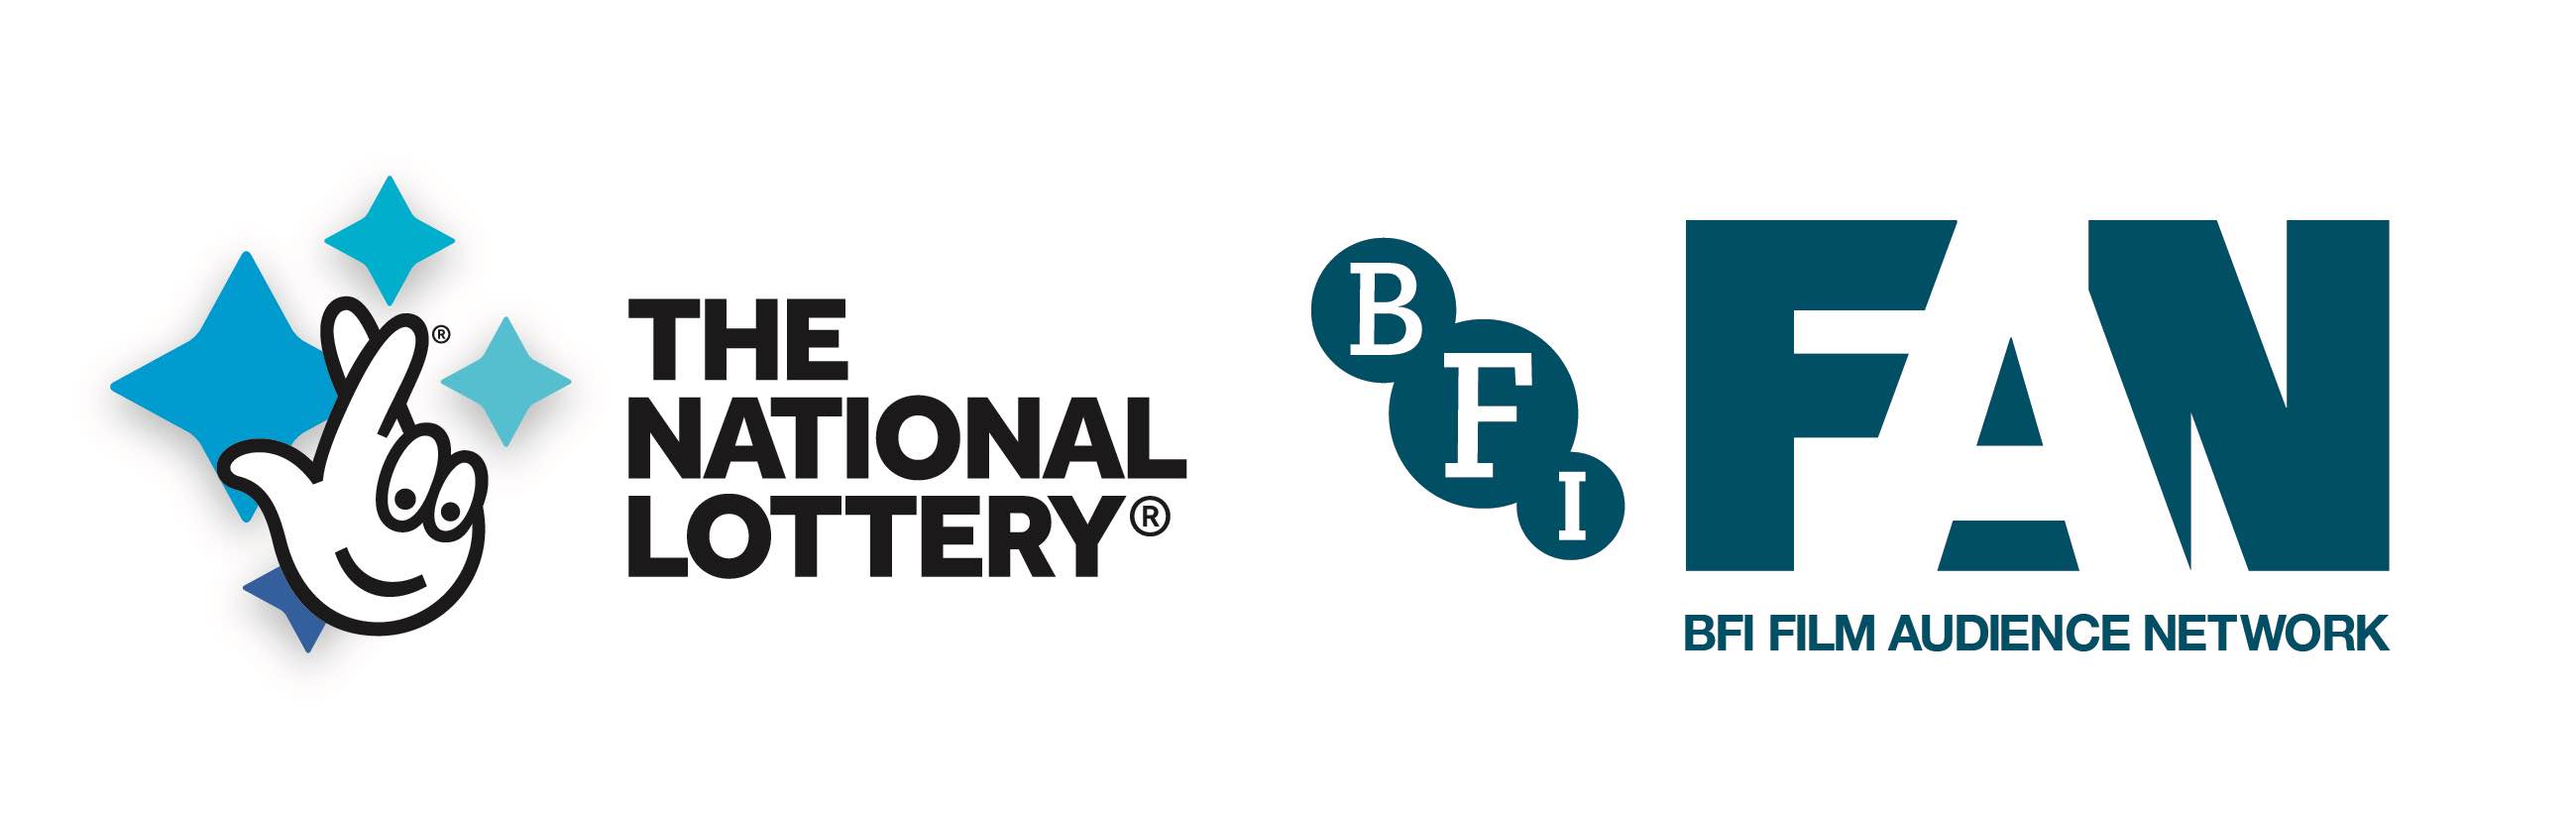 bfi-film-audience-network-logos-2018-colour-main.jpg